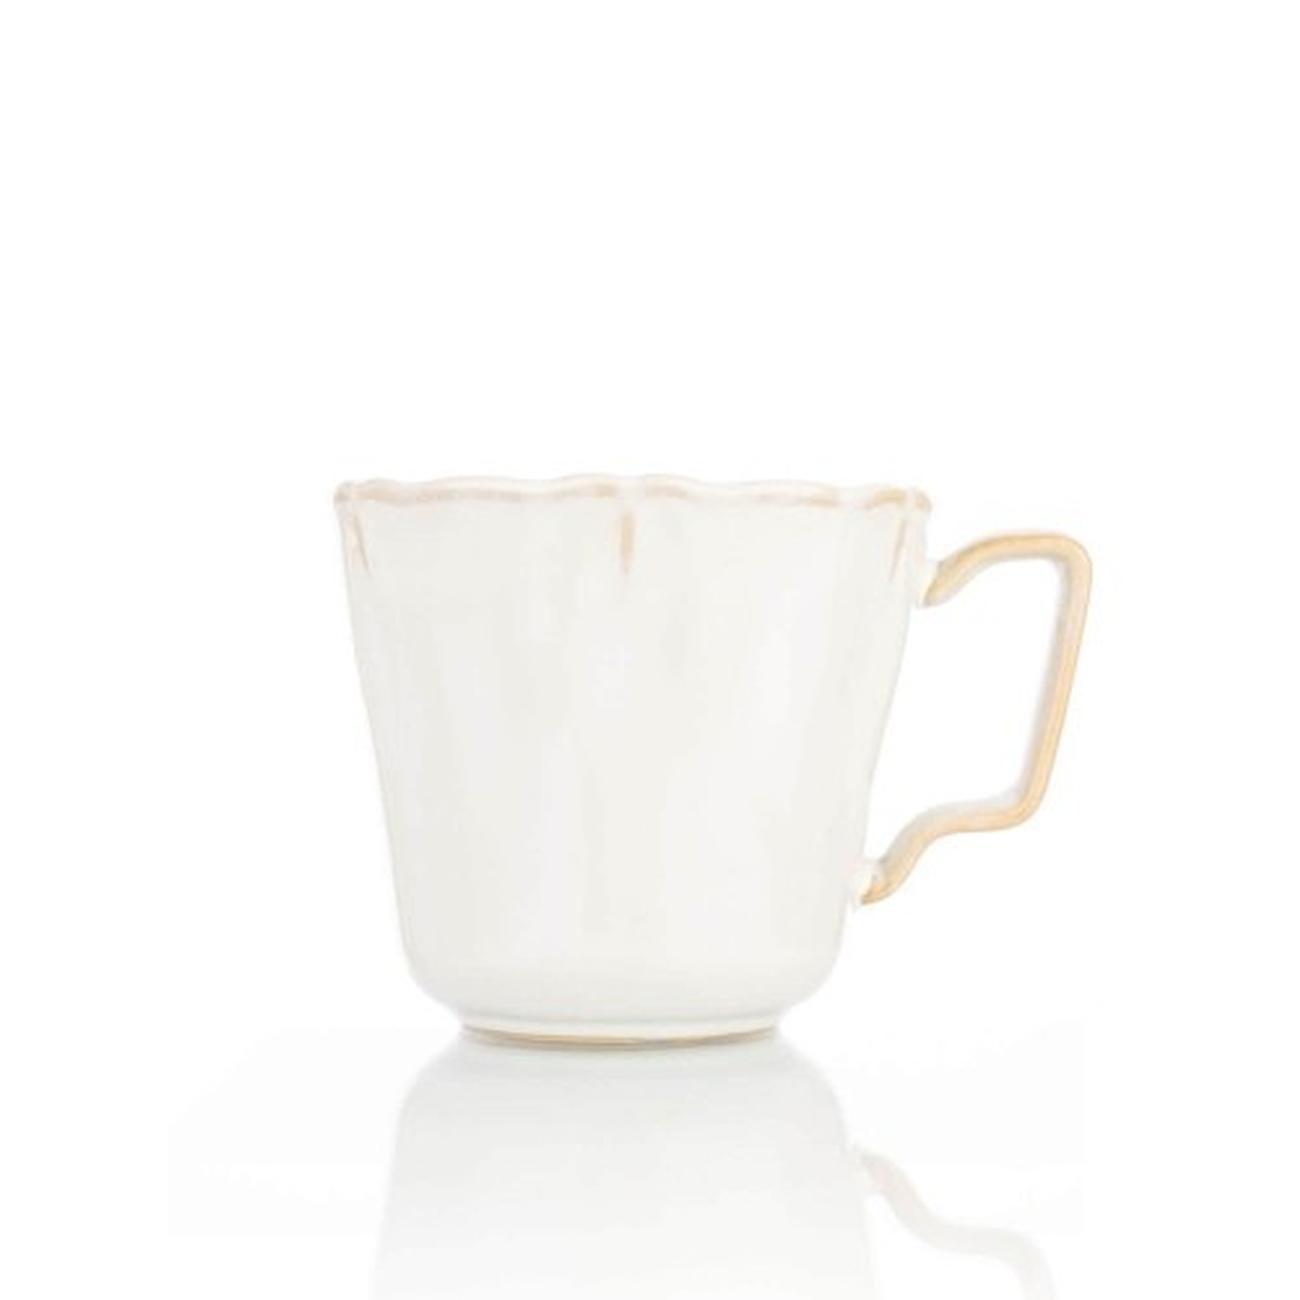 siip-white-reactive-glaze-scalloped-edge-mug - Siip Reactive Glaze Scalloped Edge Mug White